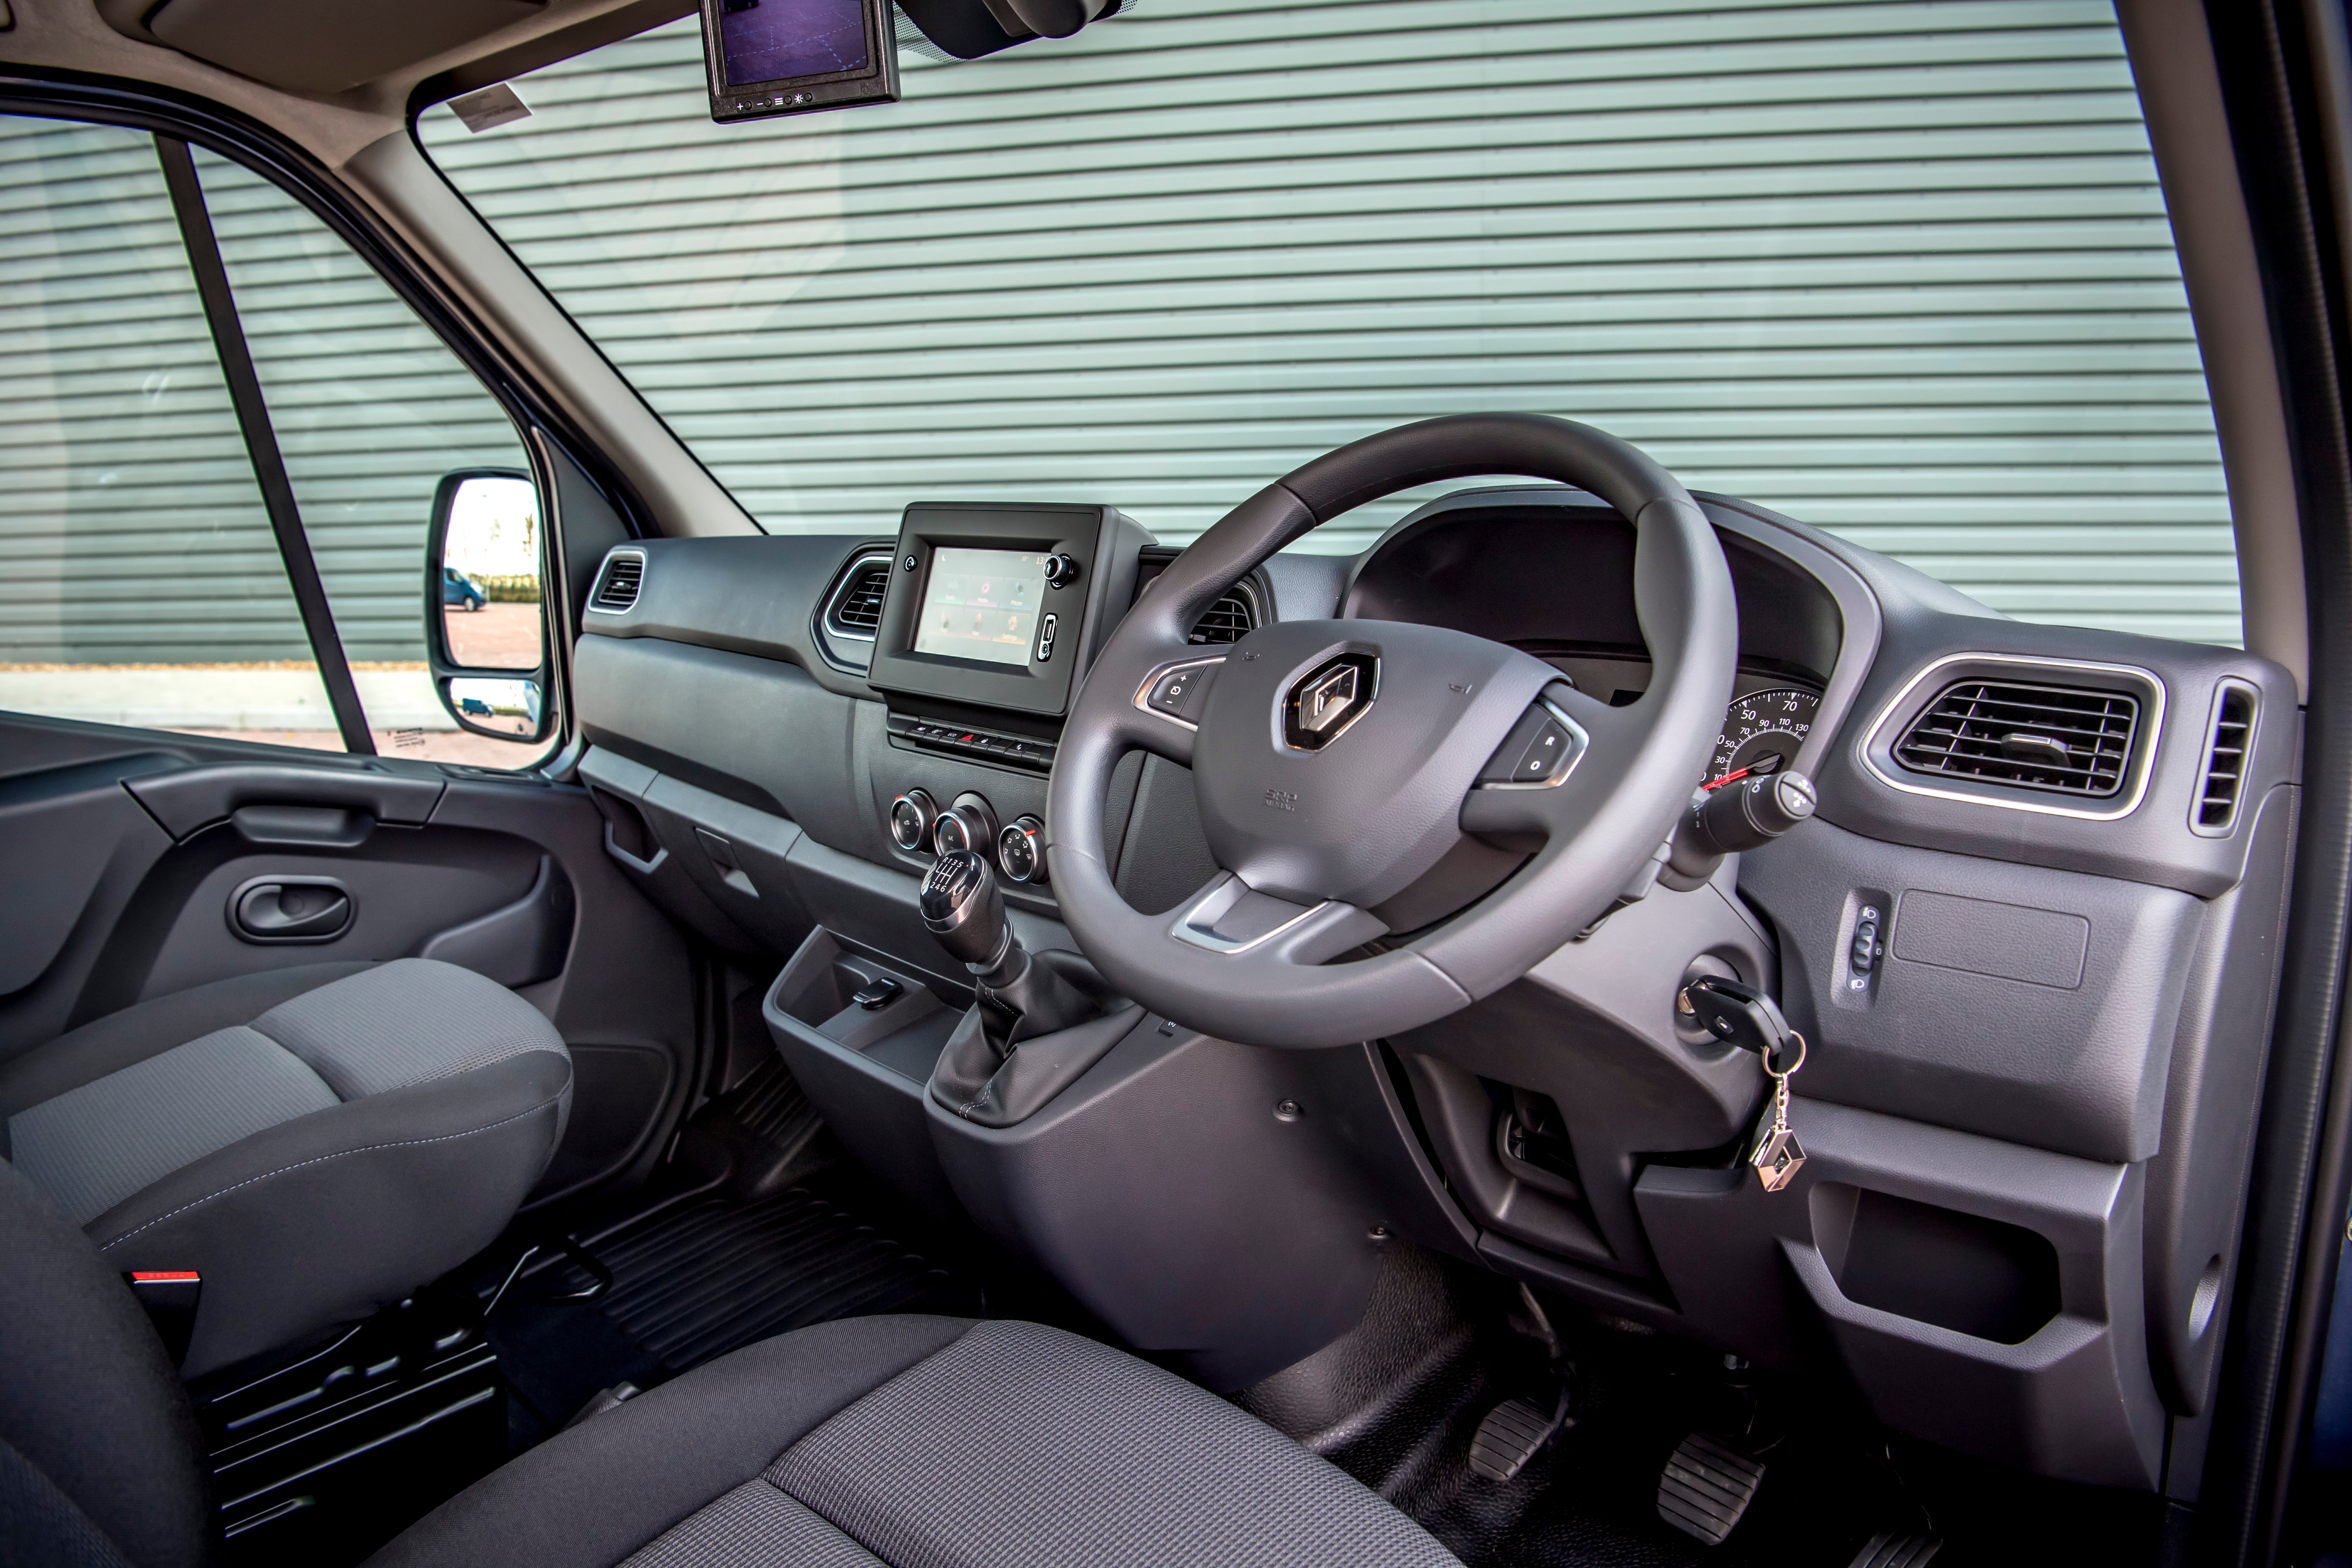 Renault Master interior cabin